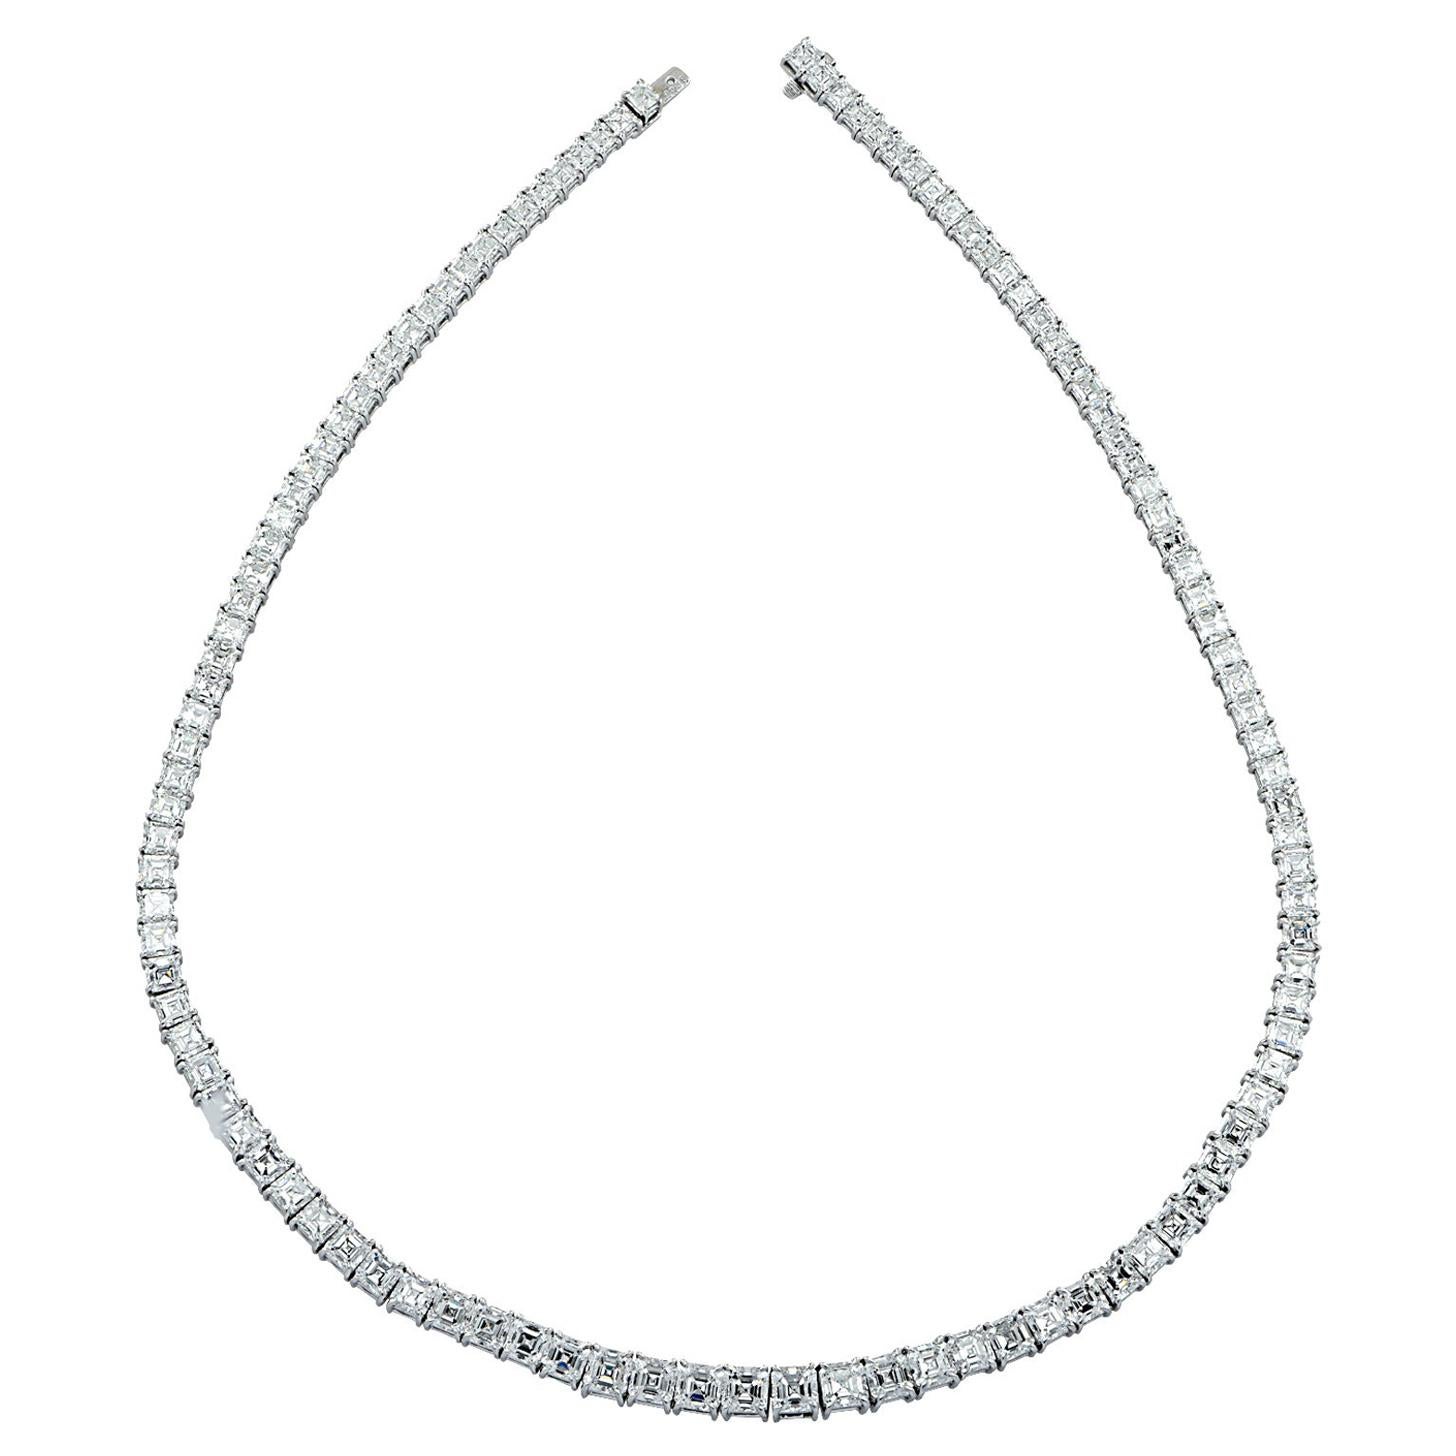 32.55 Carat Ascher Cut Diamond Riviere Necklace